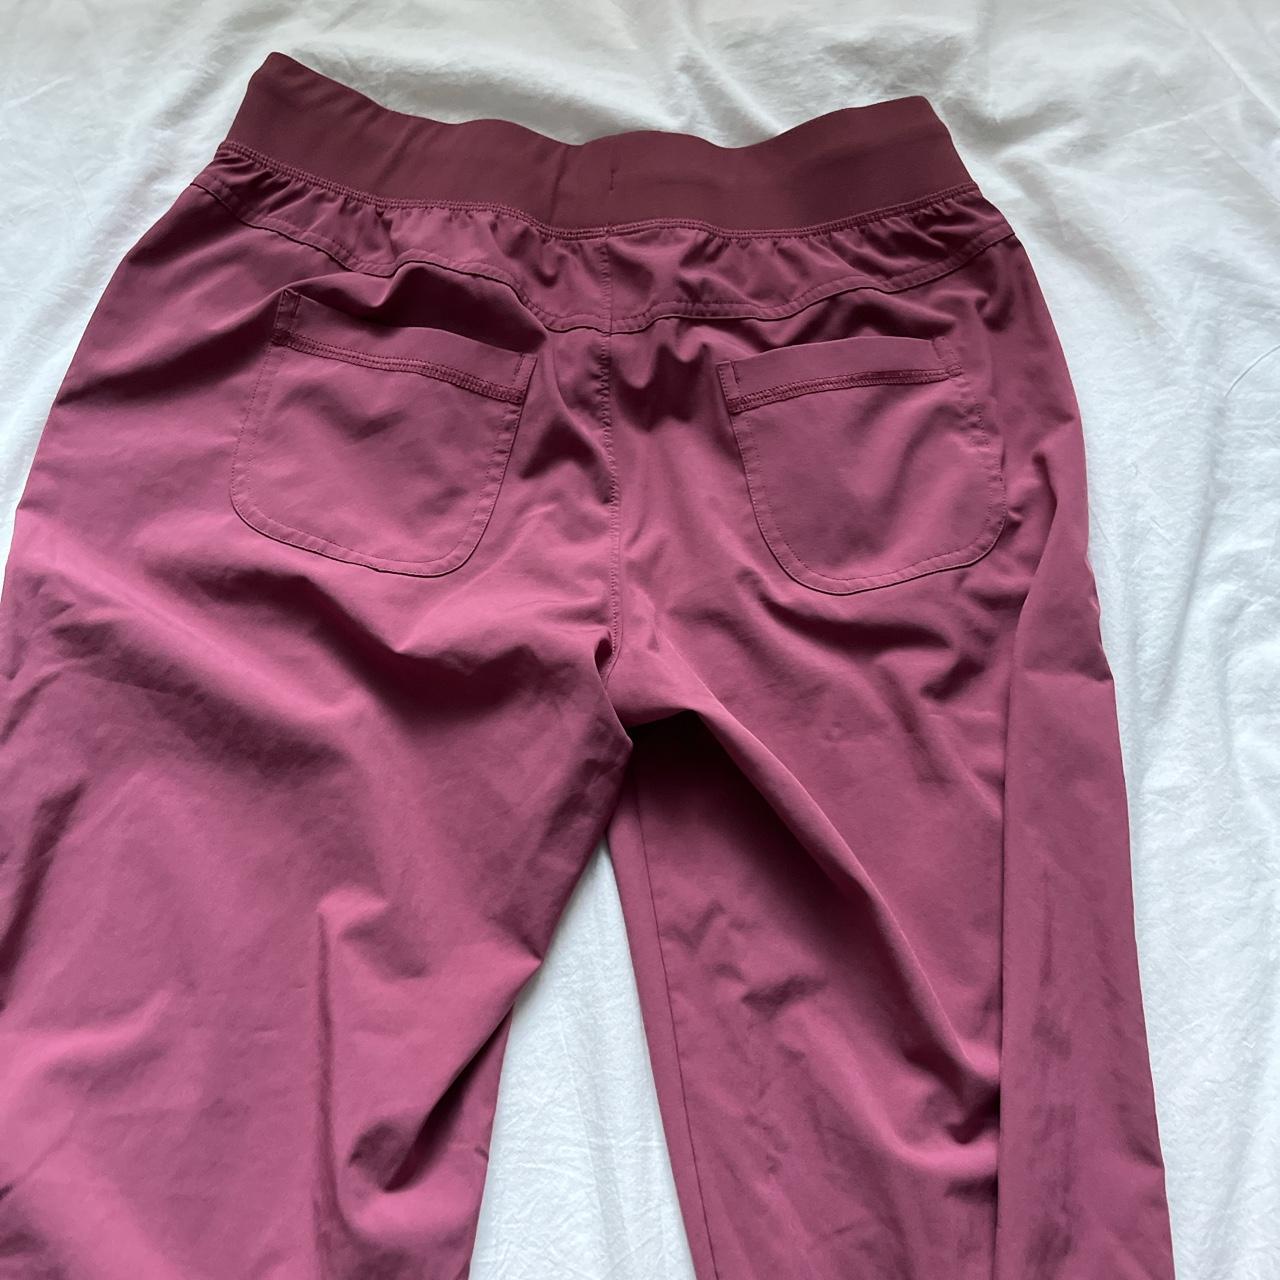 crz yoga women's maroon joggers workout pants - Depop